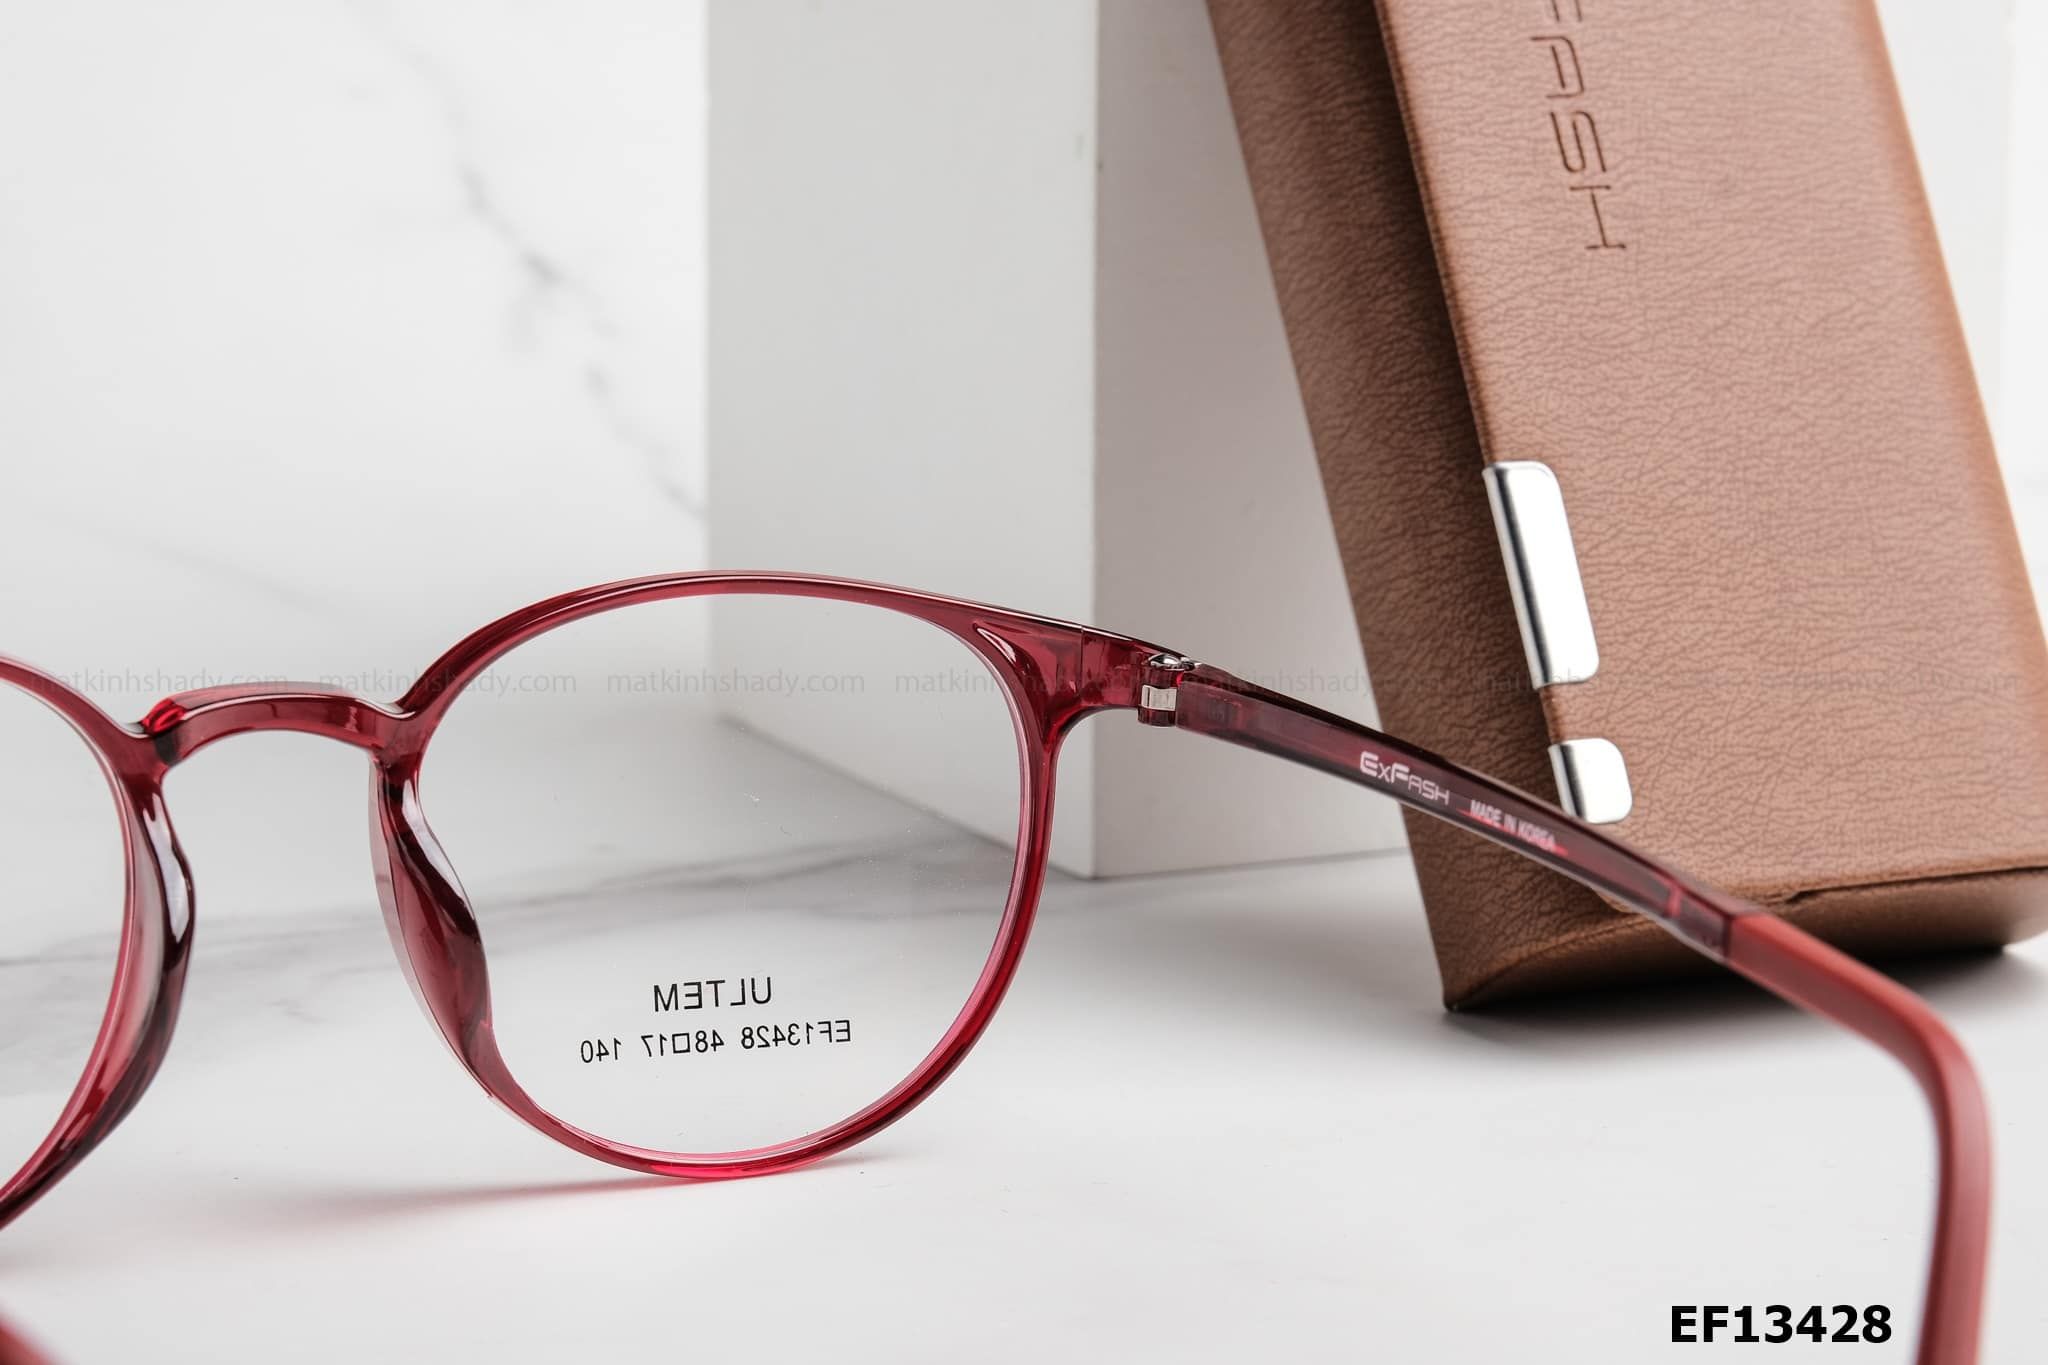  Exfash Eyewear - Glasses - EF13428 